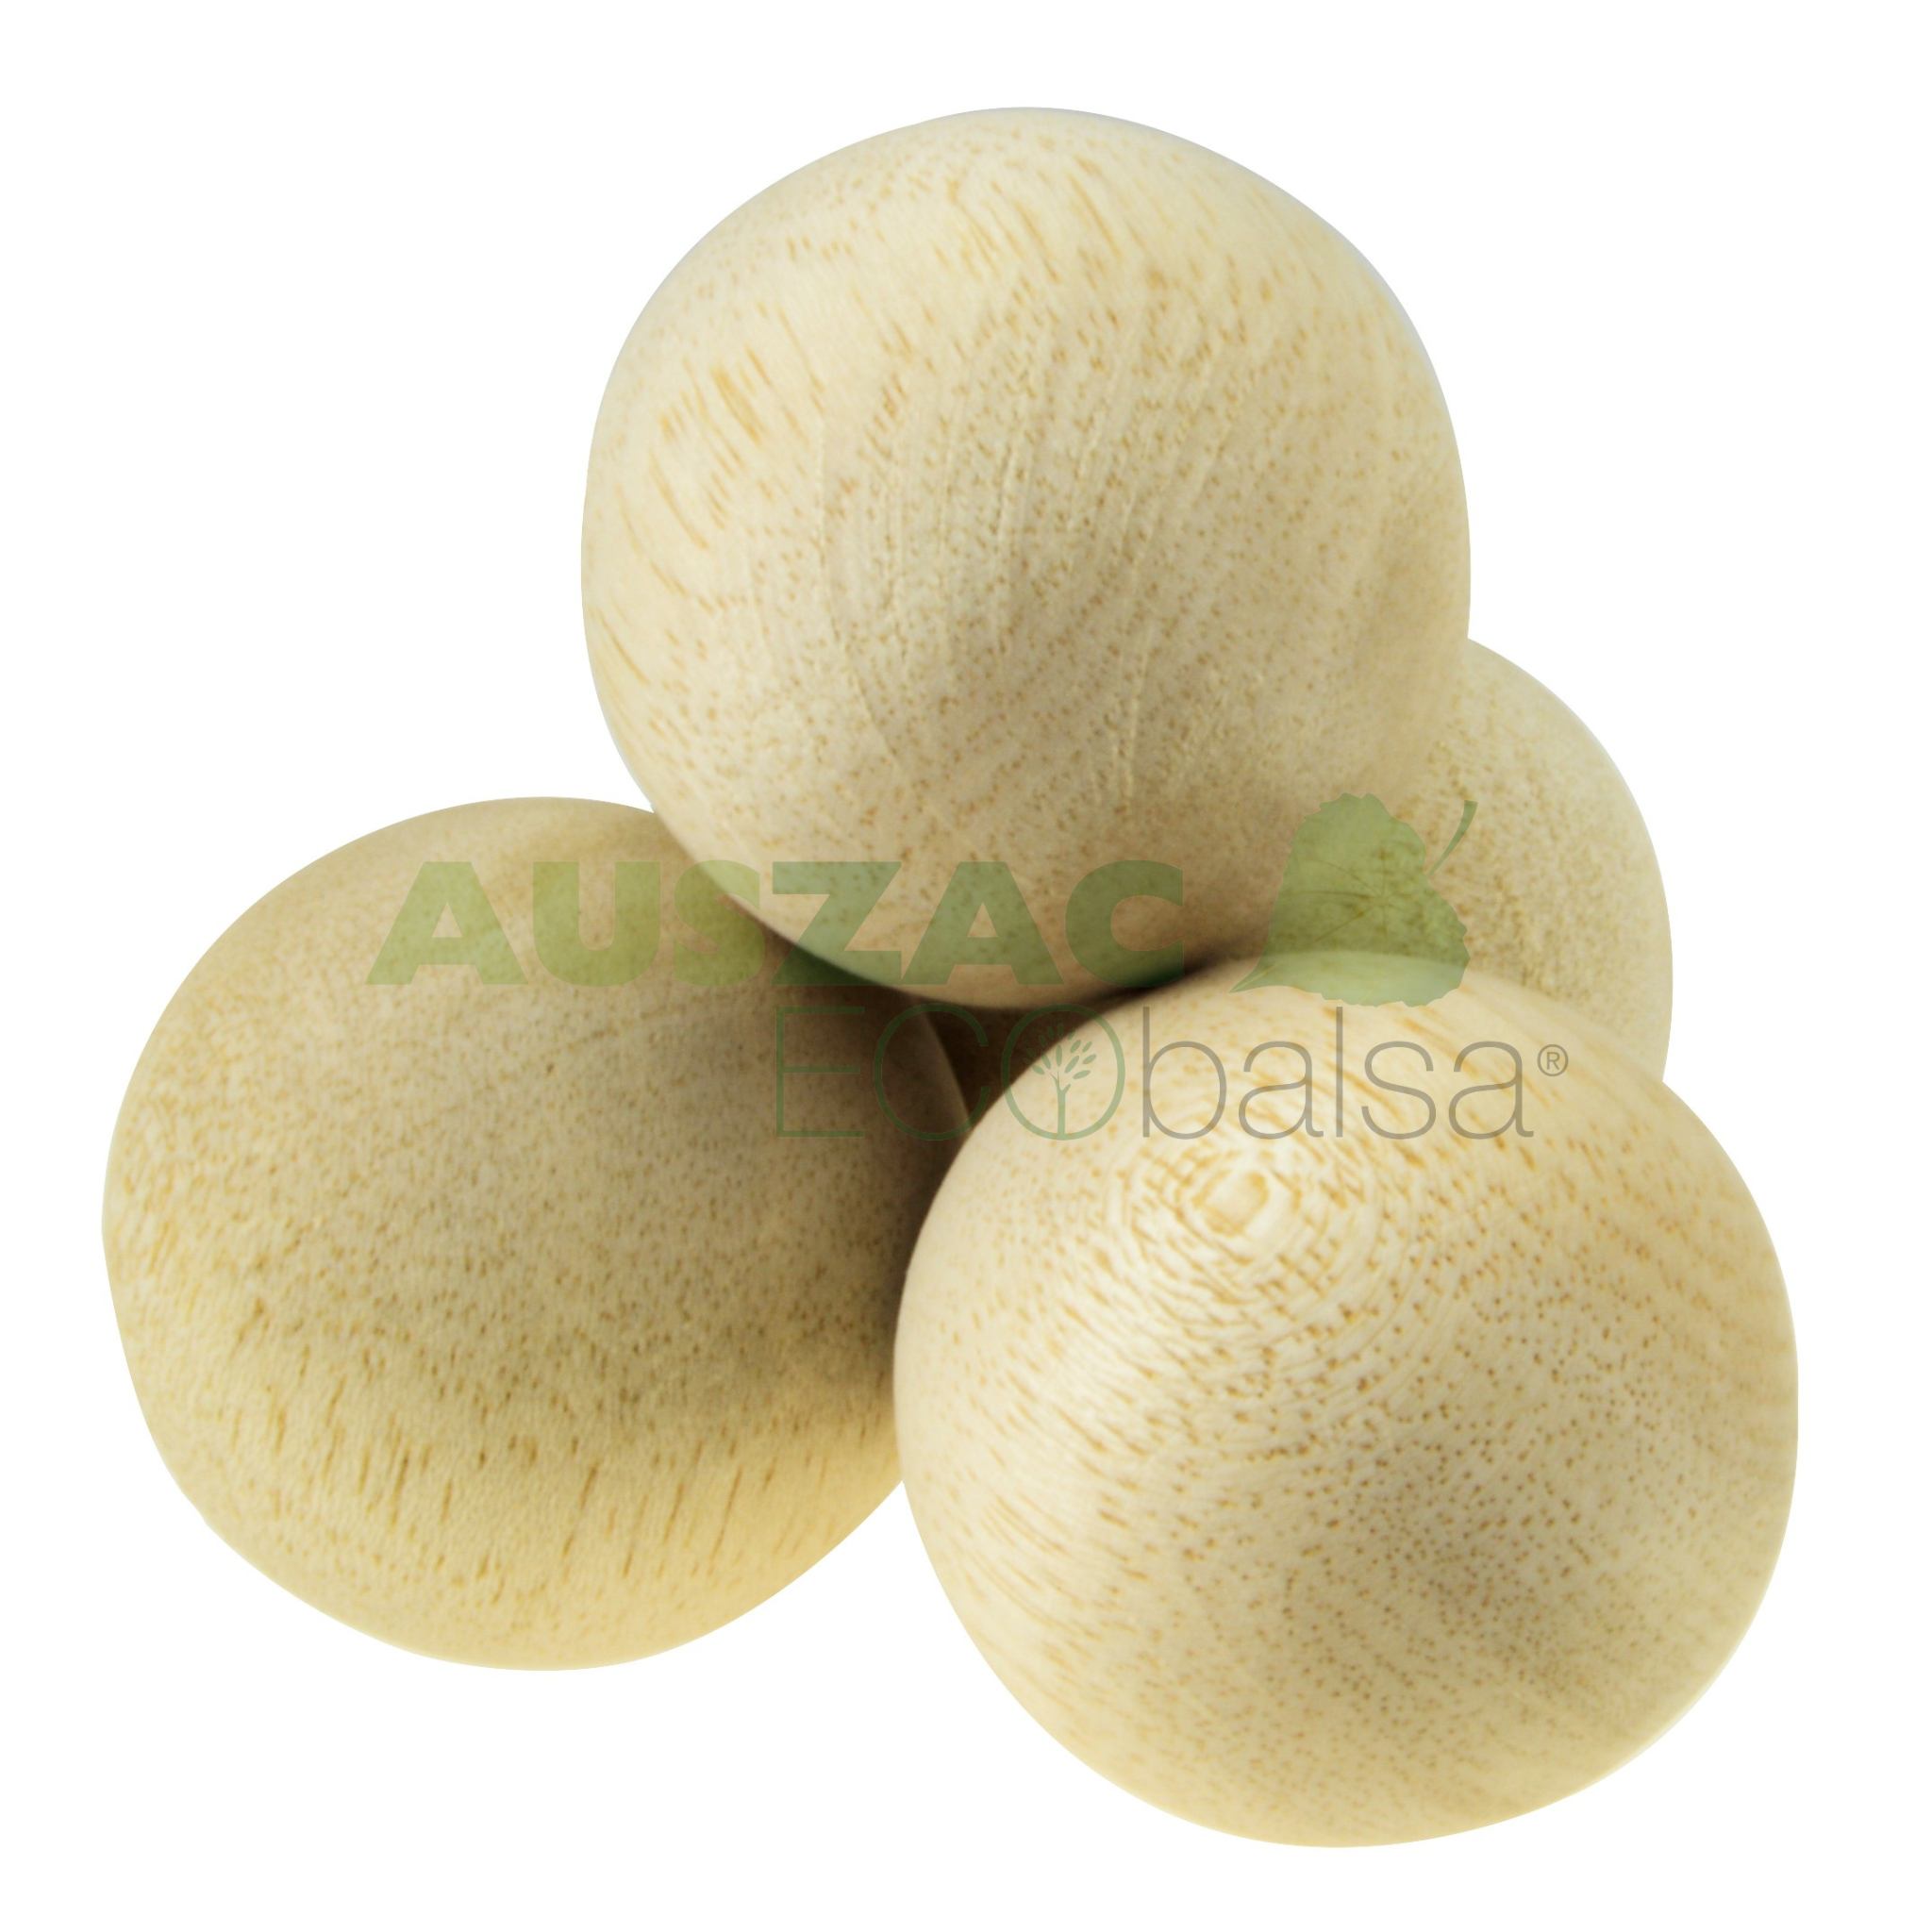 Responsibly-Sourced & Durable balsa wood balls 